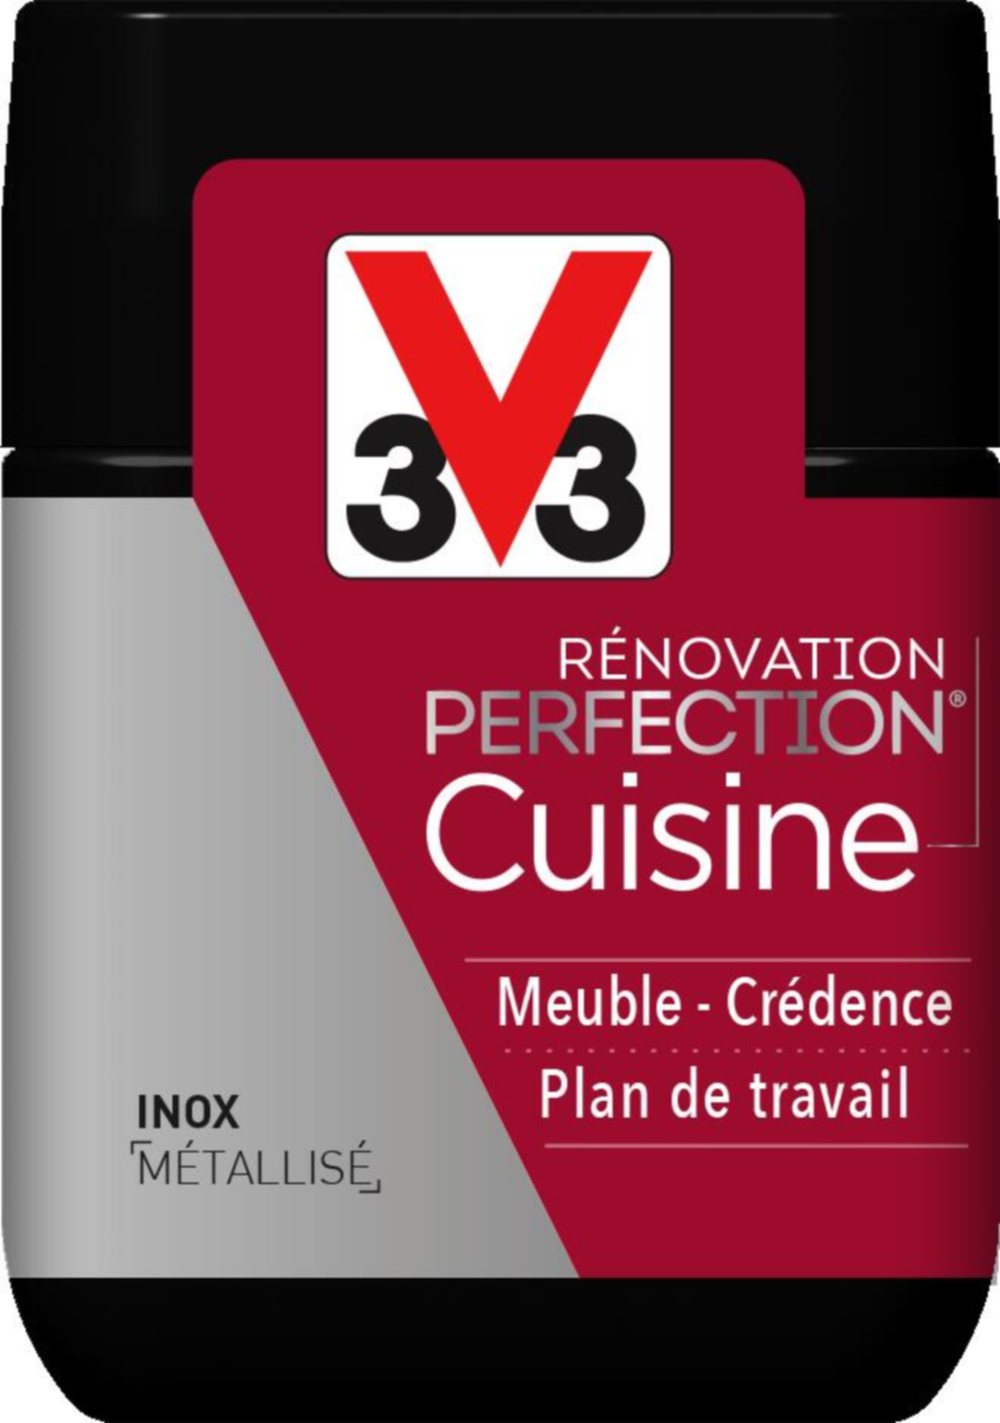 Peinture rénovation cuisine Perfection inox métallisé satin testeur 75ml - V33